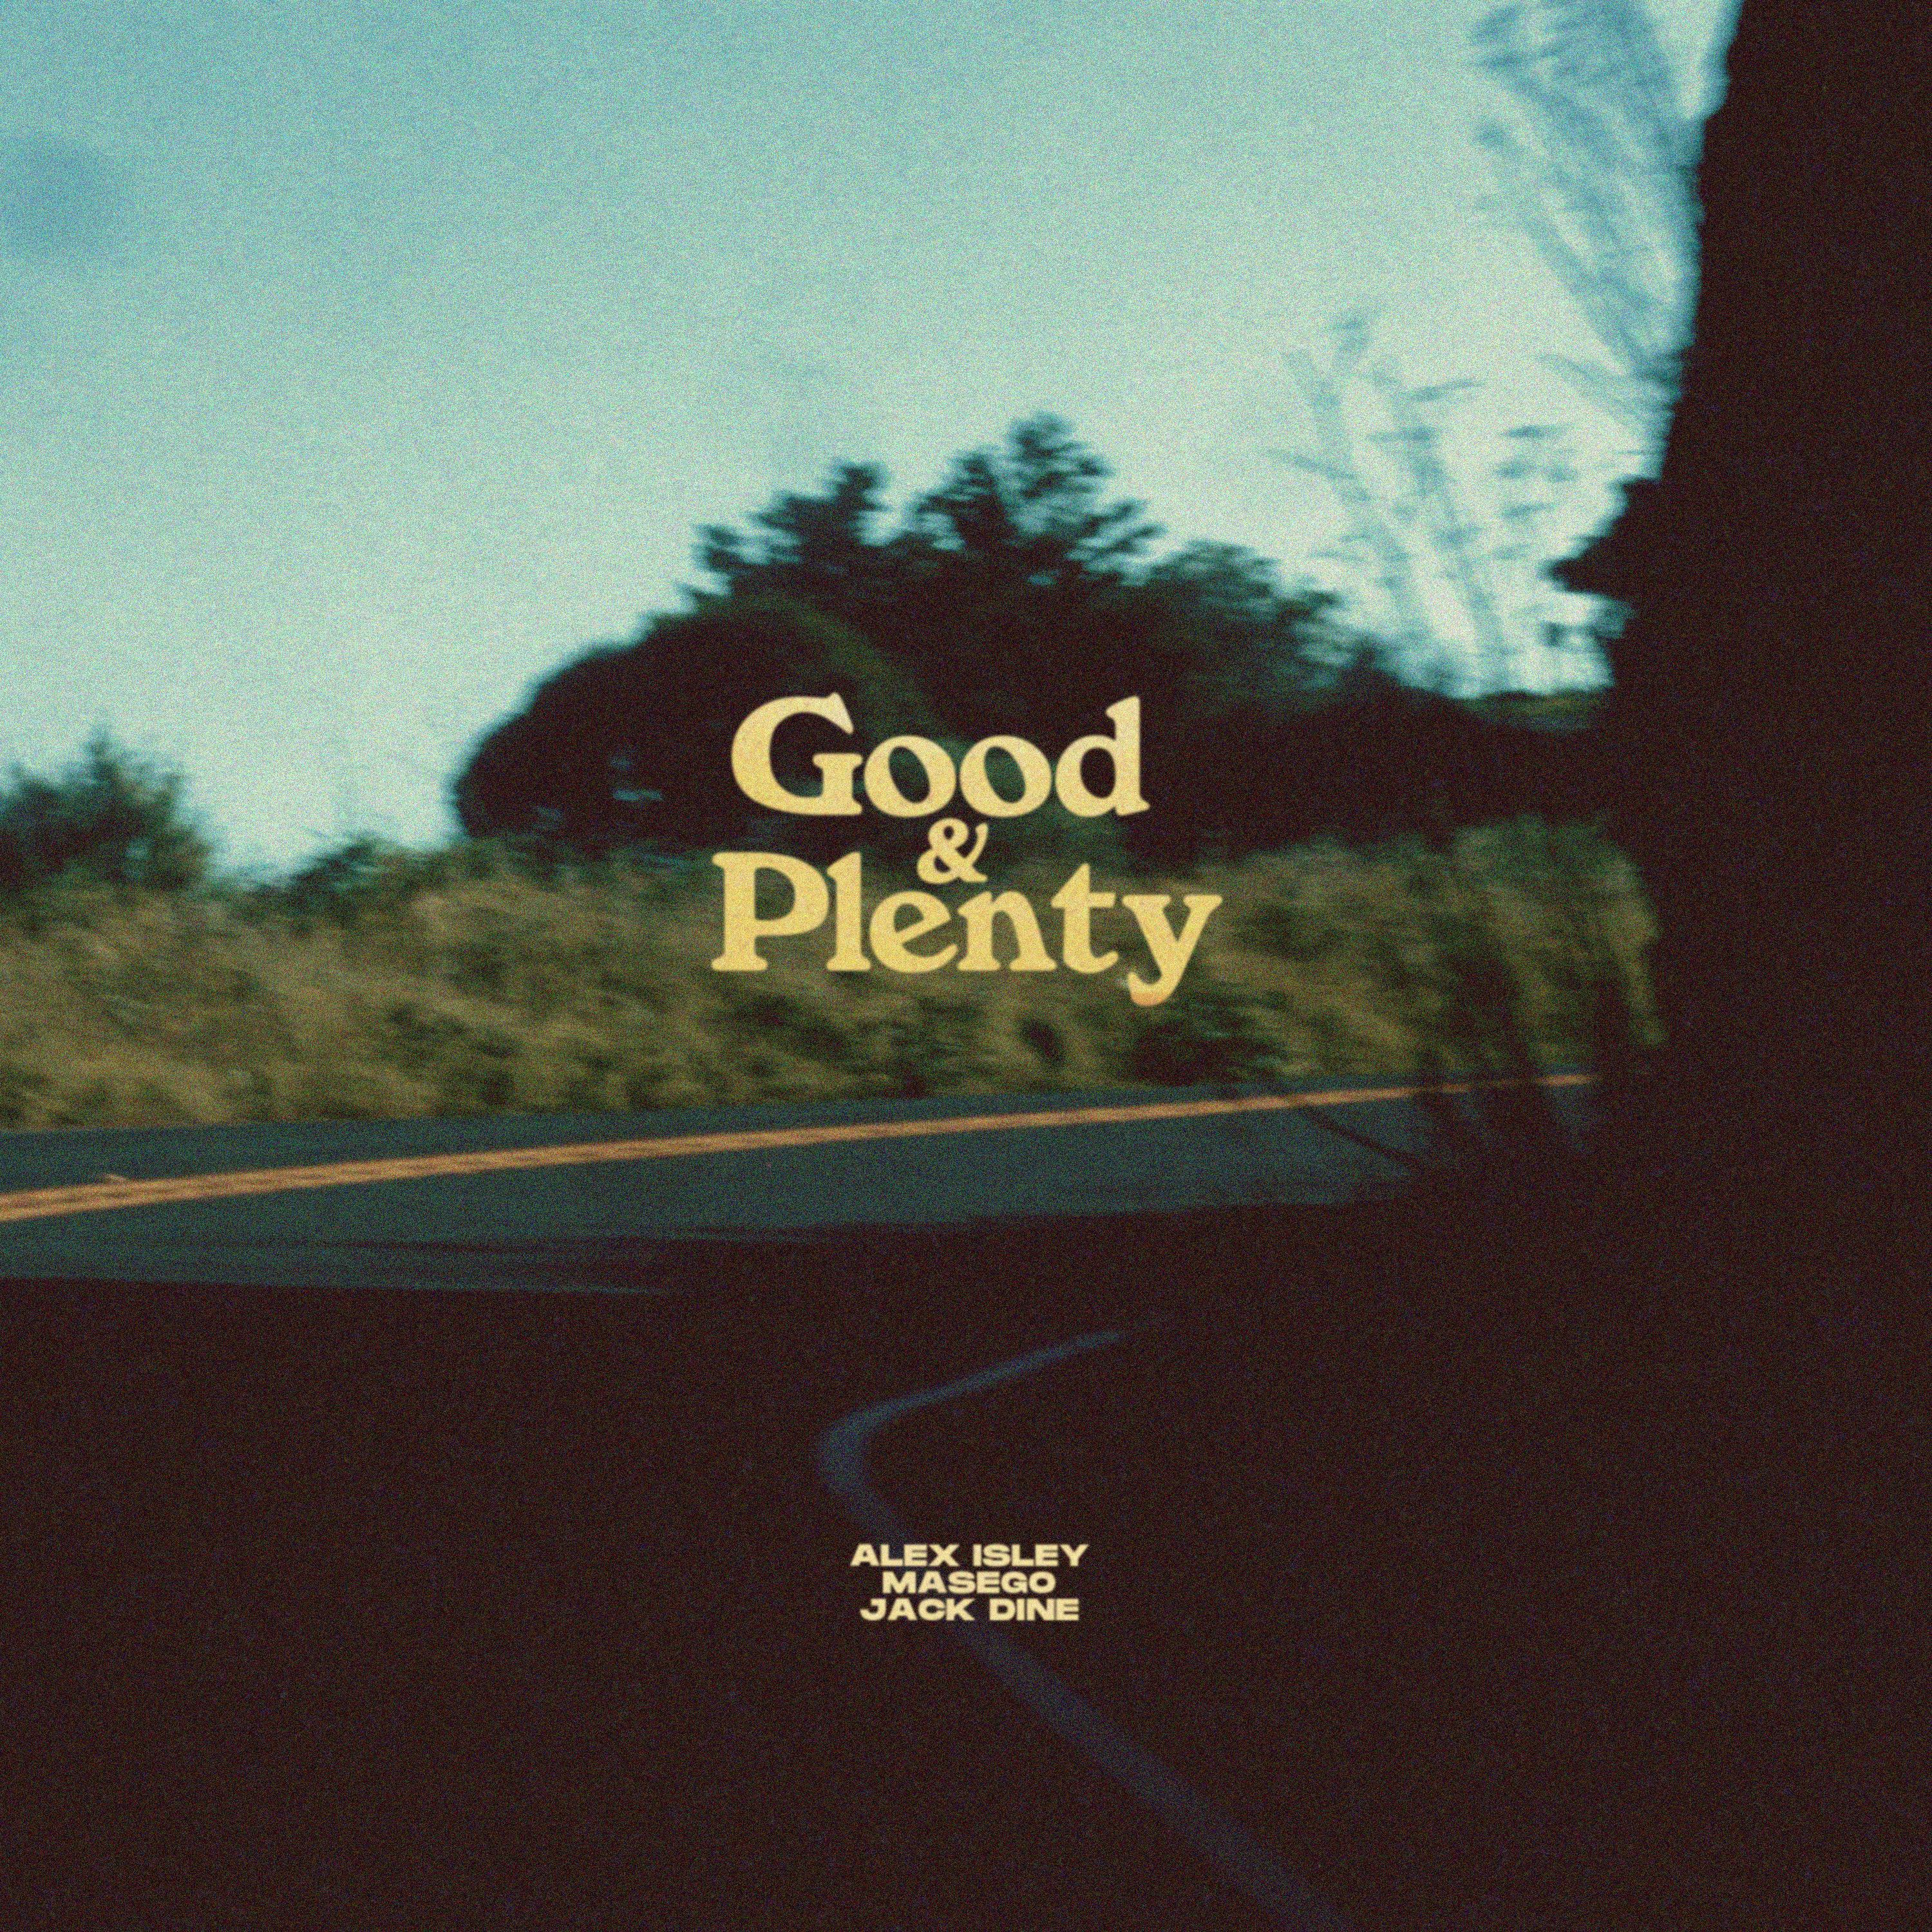 Good & Plenty歌词 歌手Alex Isley / Masego / Jack Dine-专辑Good & Plenty-单曲《Good & Plenty》LRC歌词下载